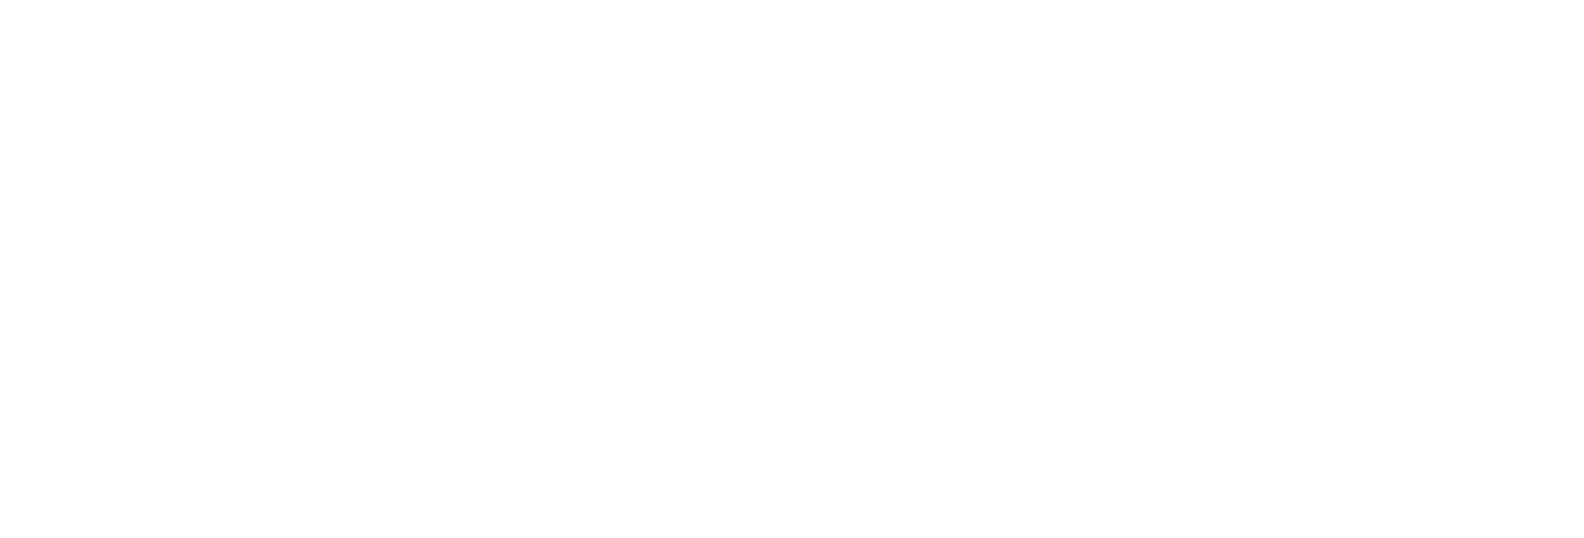 Rithm Capital logo large for dark backgrounds (transparent PNG)